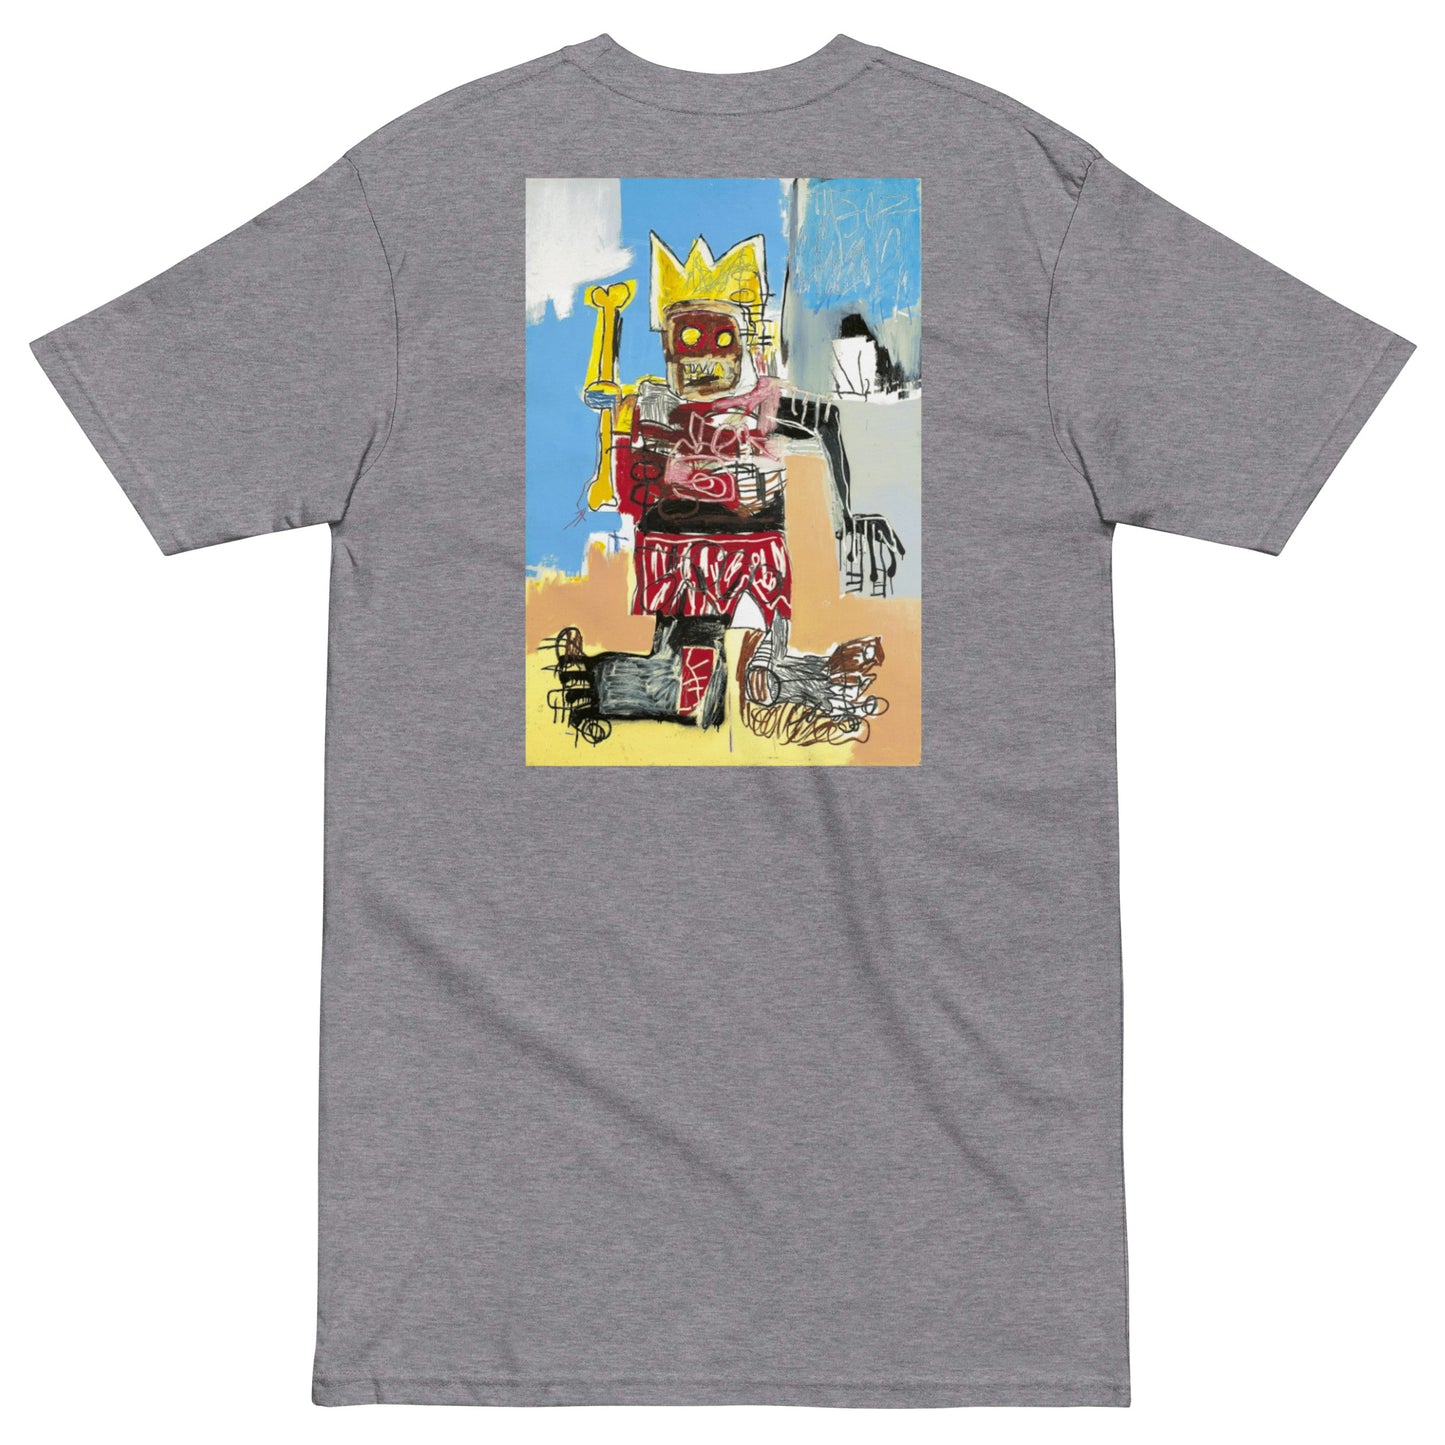 Jean-Michel Basquiat "Untitled" 1982 Artwork Embroidered + Printed Premium Streetwear T-shirt Grey